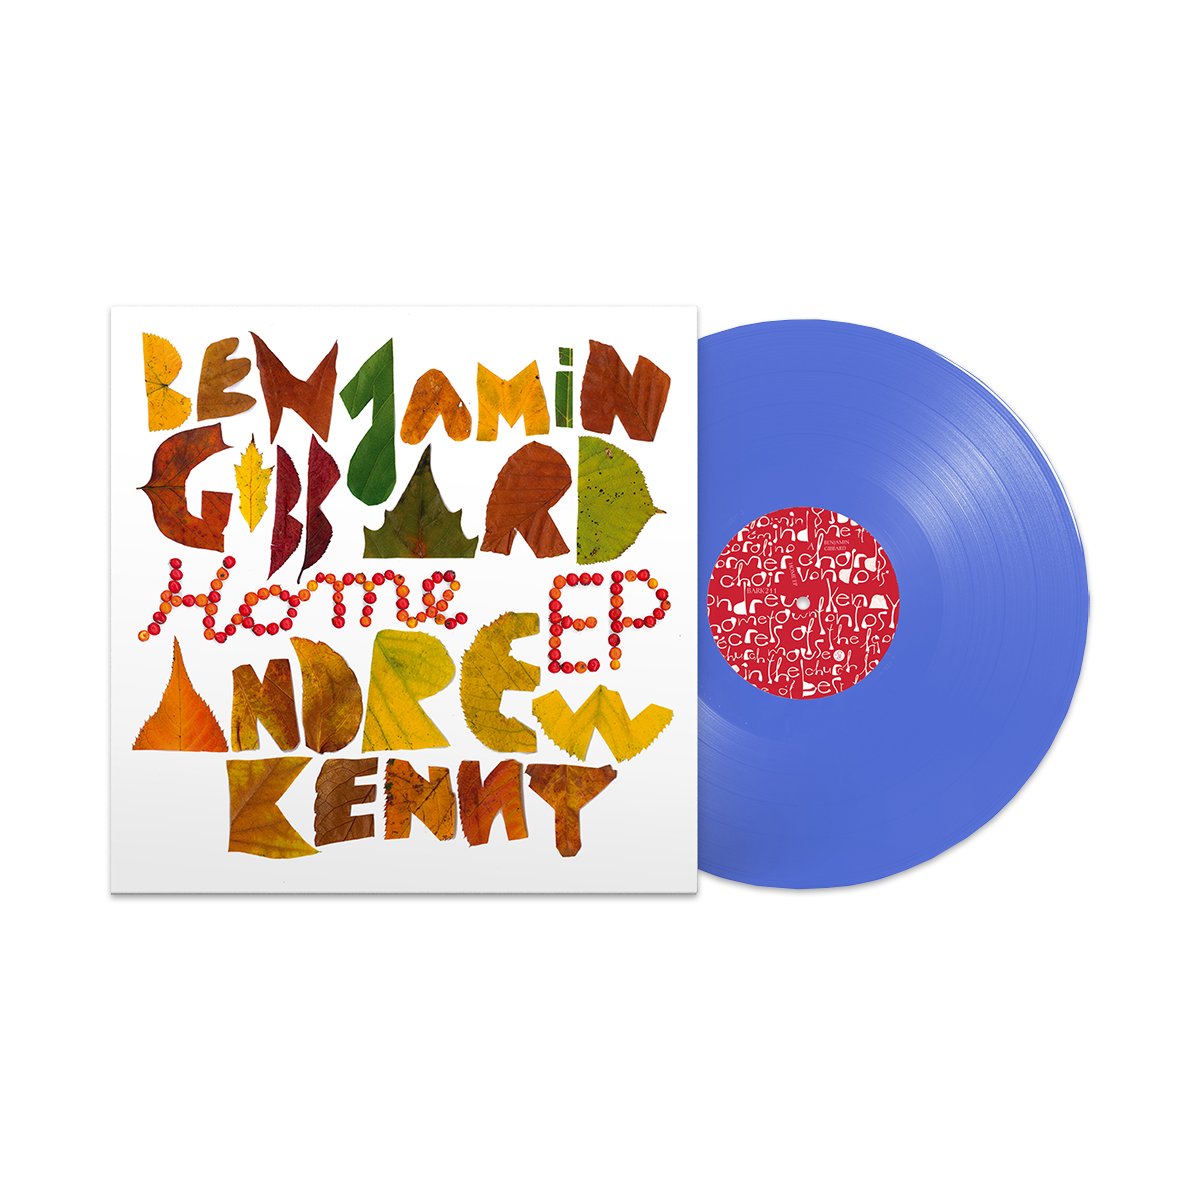 Benjamin Gibbard & Andrew Kenny – Home EP (Cobalt Blue Vinyl LP)